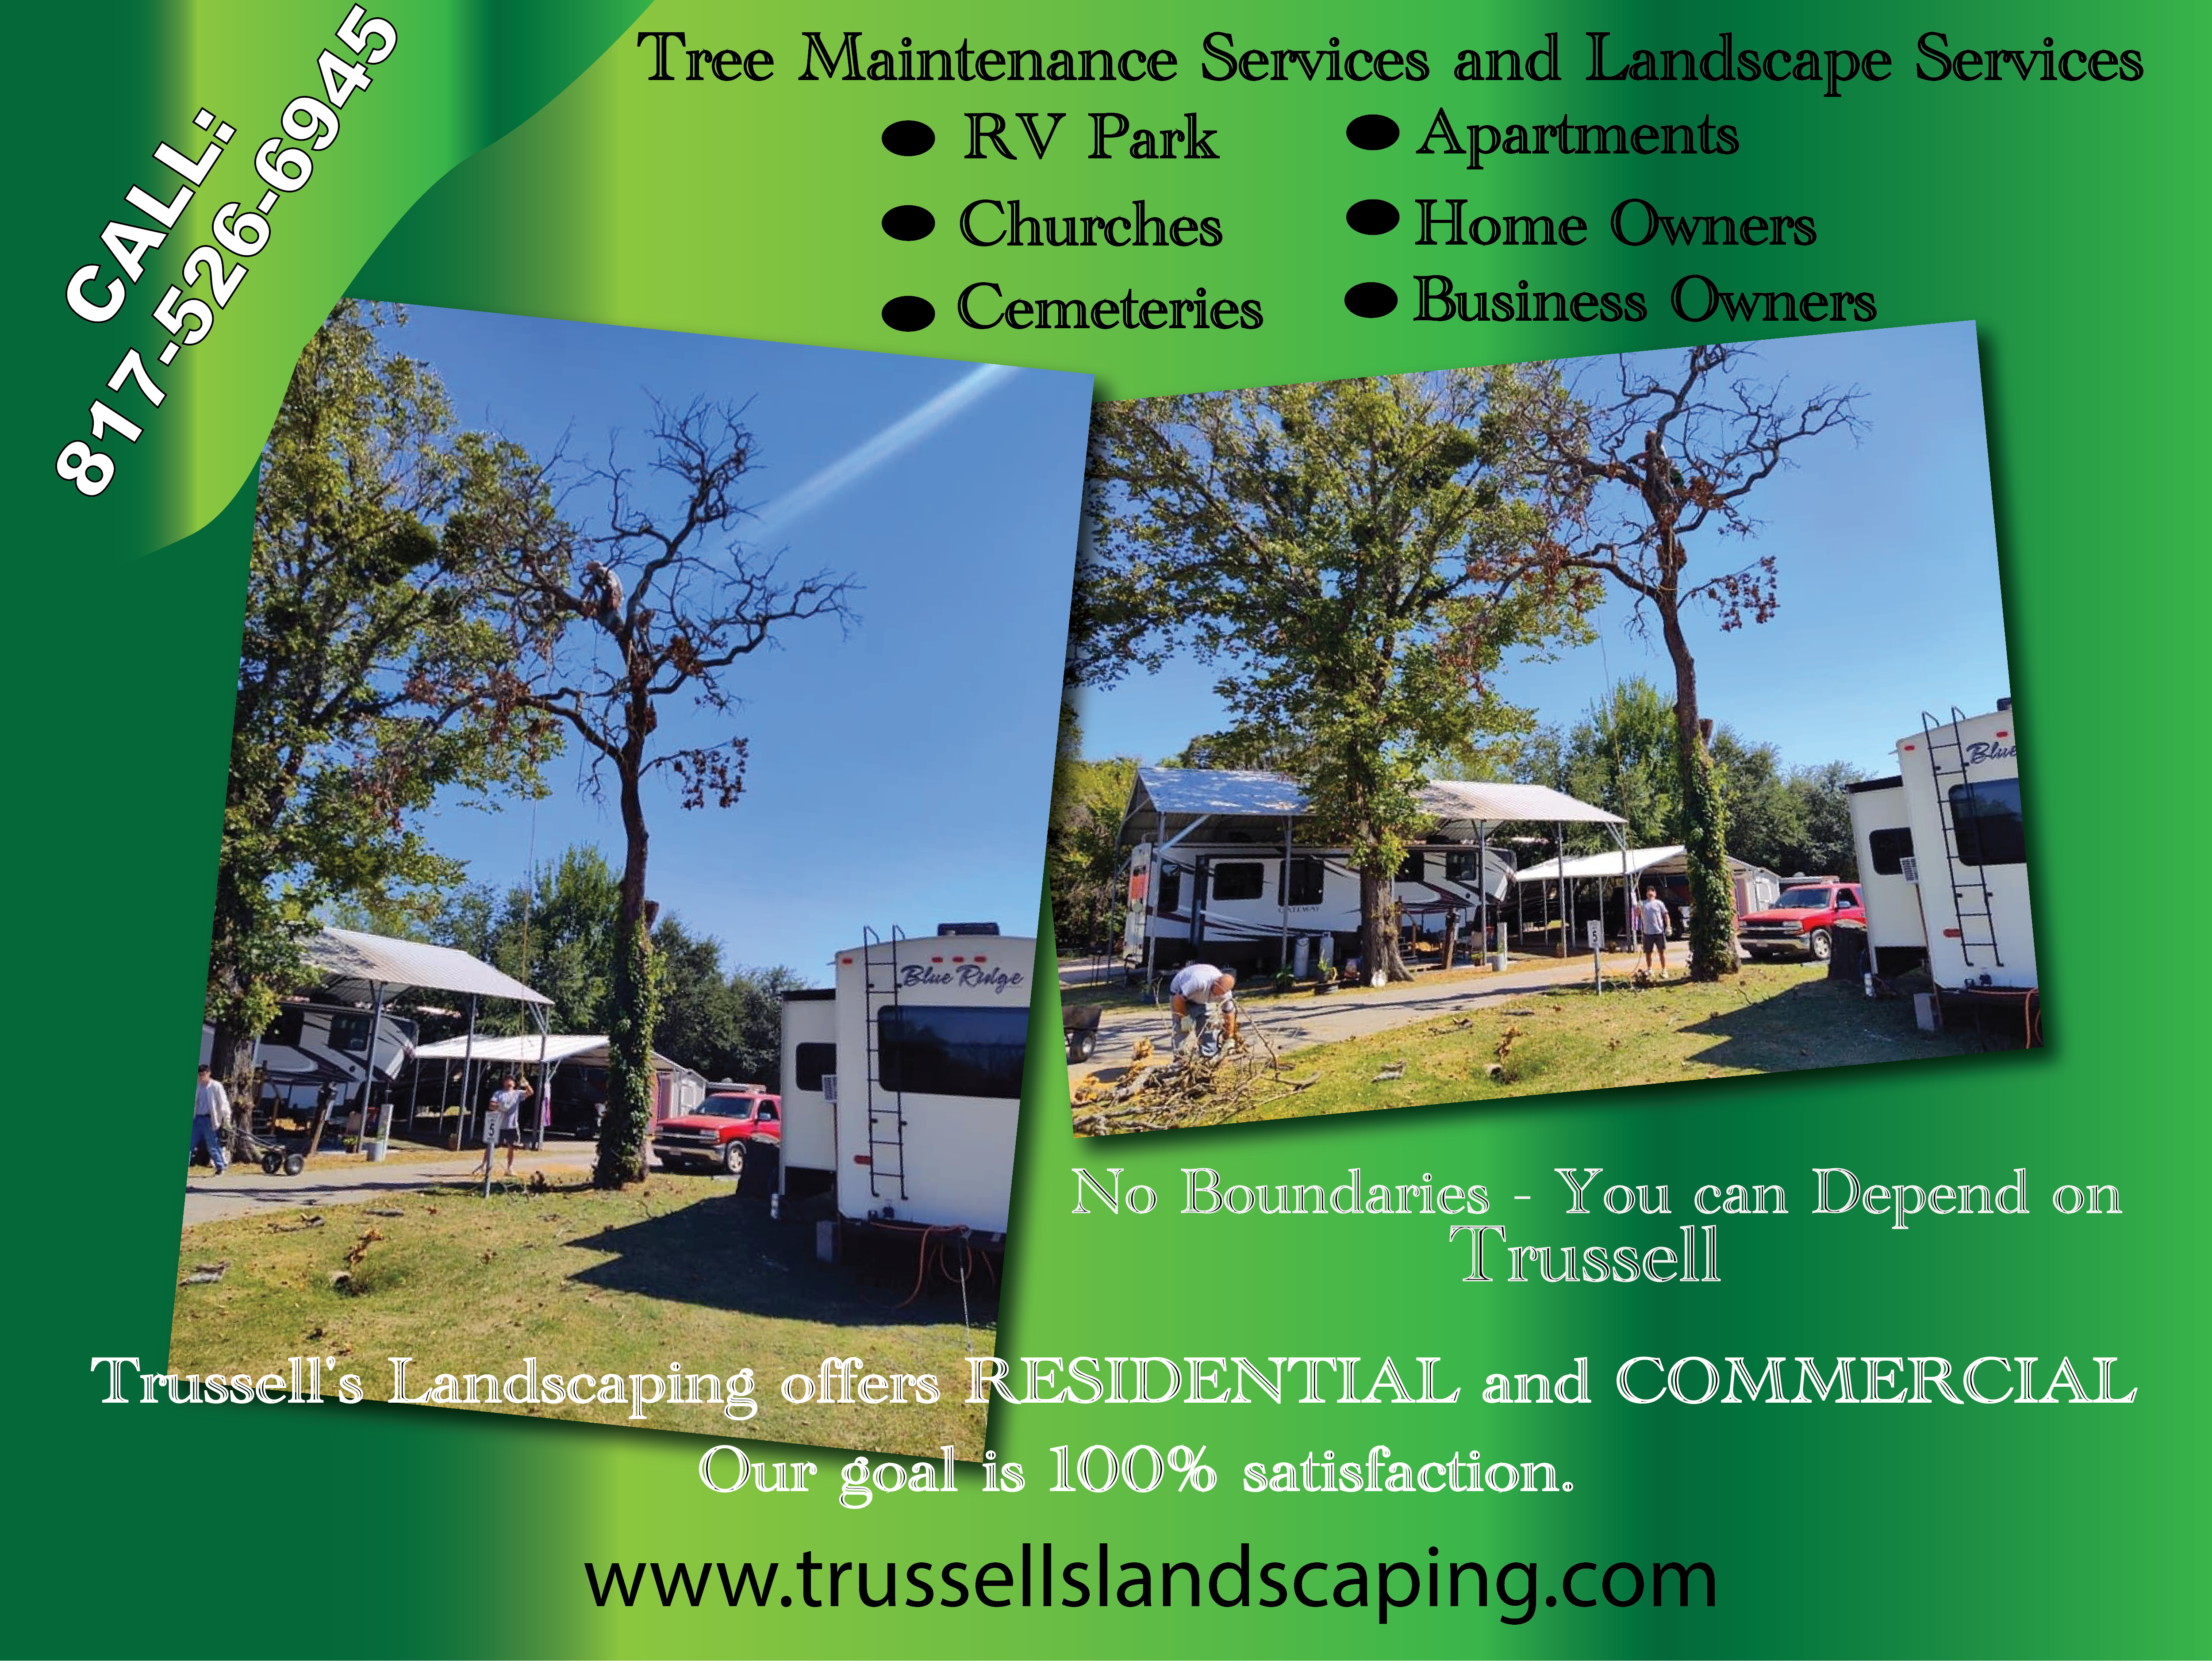 RV Park Tree Maintenance